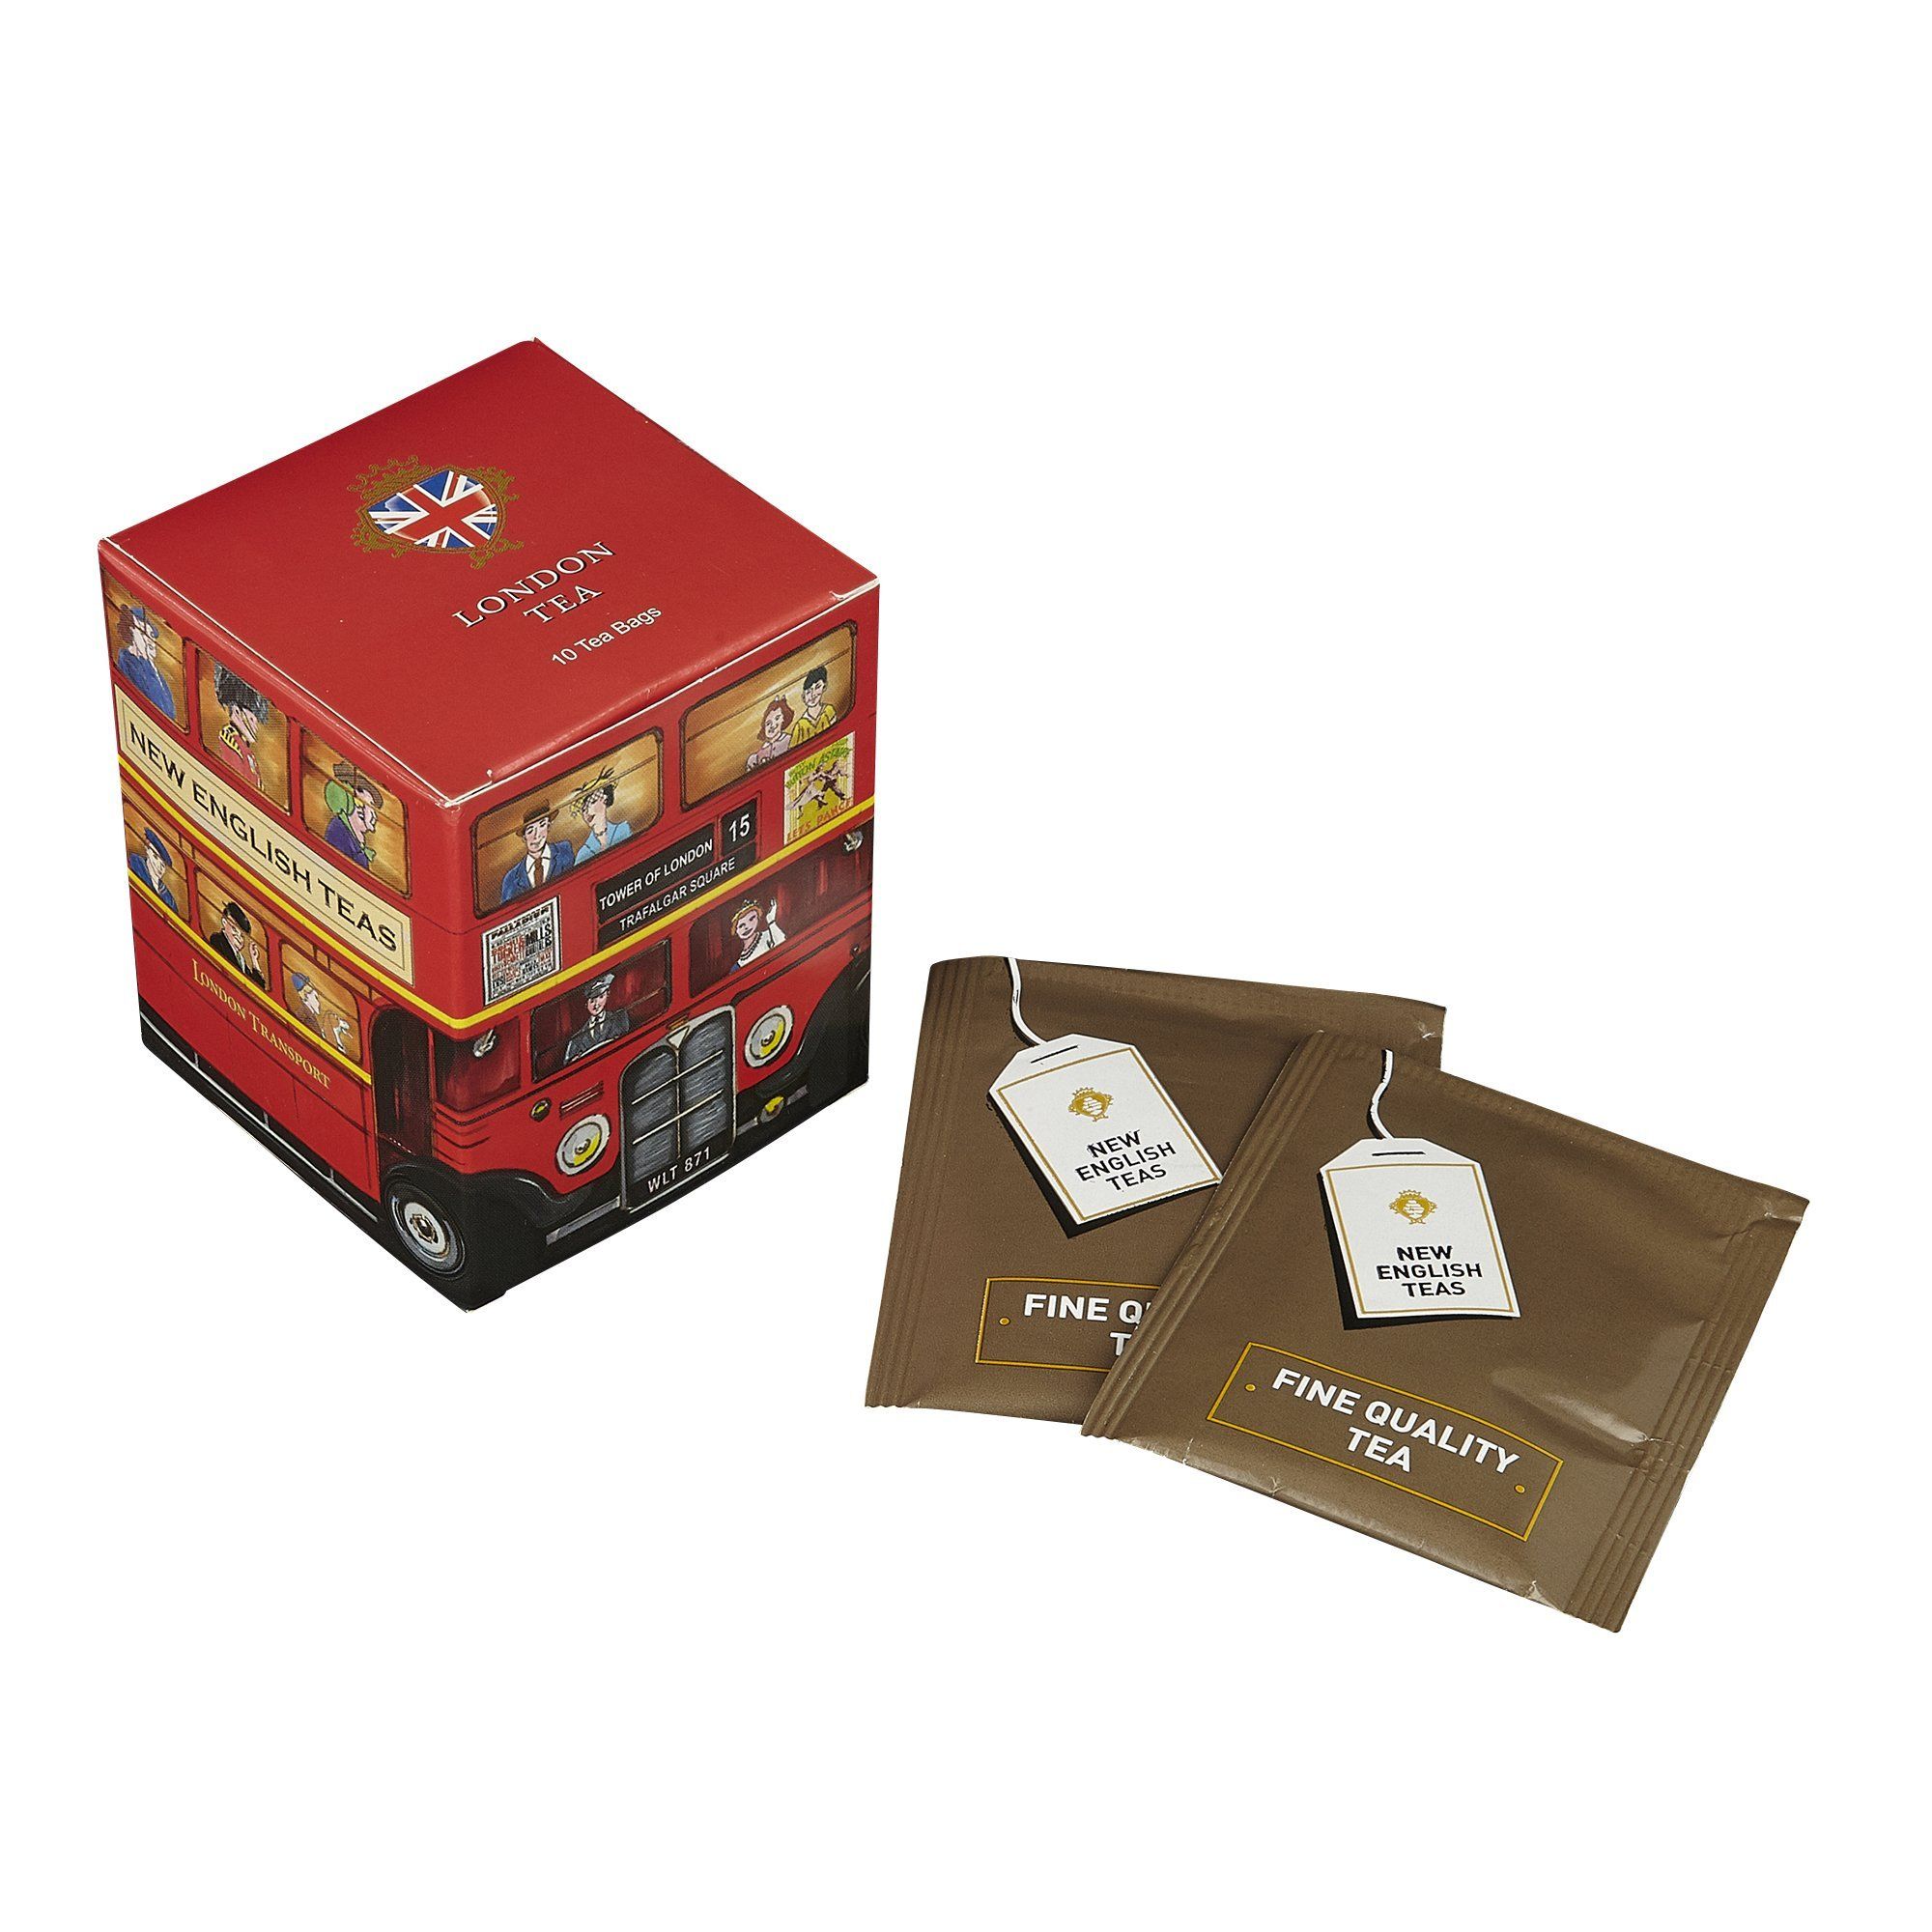 Red London Bus London Tea 10 Teabag Carton Black Tea New English Teas 